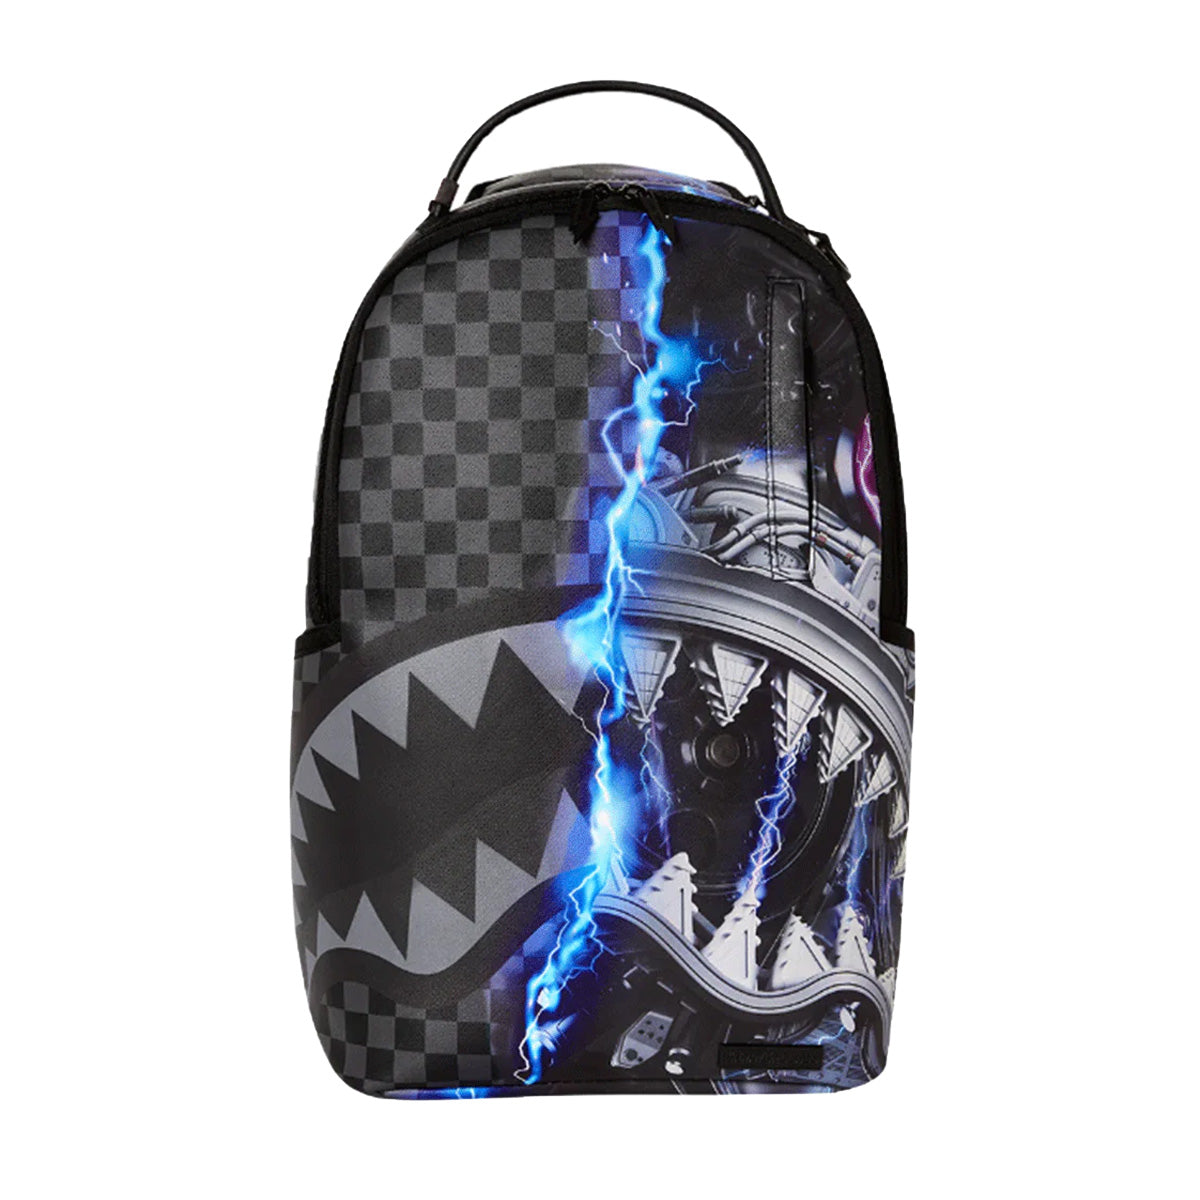 Sprayground Checkered Shark Backpack in Black & Grey